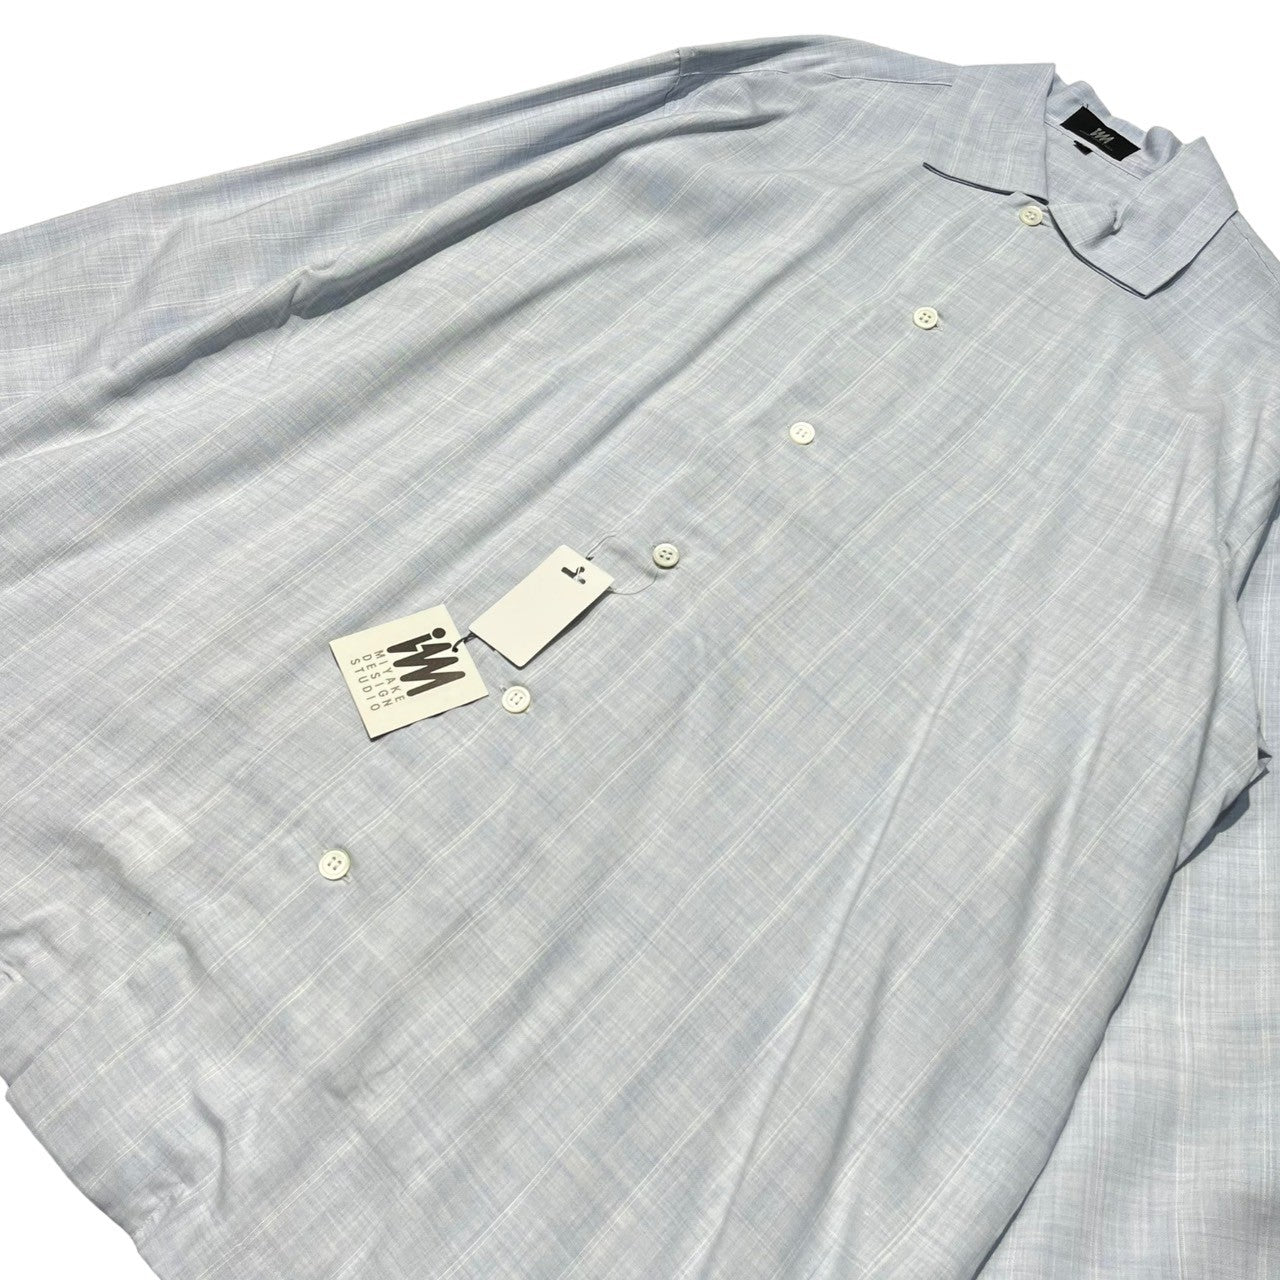 MIYAKE DESIGN STUDIO(ミヤケデザインスタジオ) 80's ~ 90's Polynosic regular collar shirt ポリノジック レギュラーカラー シャツ ハミルトン社製 IMIT LP2172-31 M ブルー 80年代 ~ 90年代 イッセイミヤケ